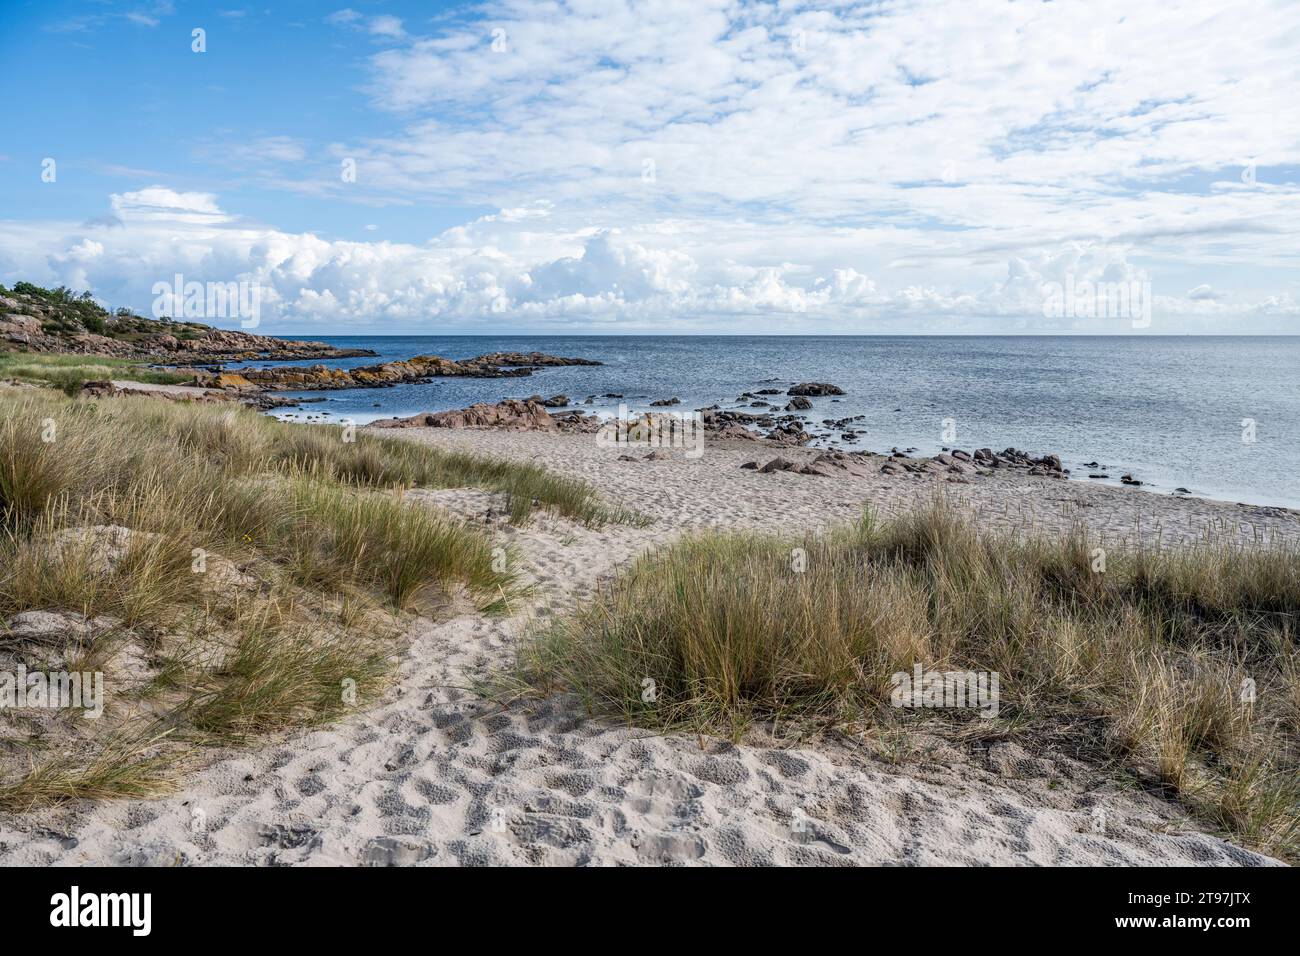 Denmark, Bornholm, Sandvig beach with Baltic Sea in background Stock Photo